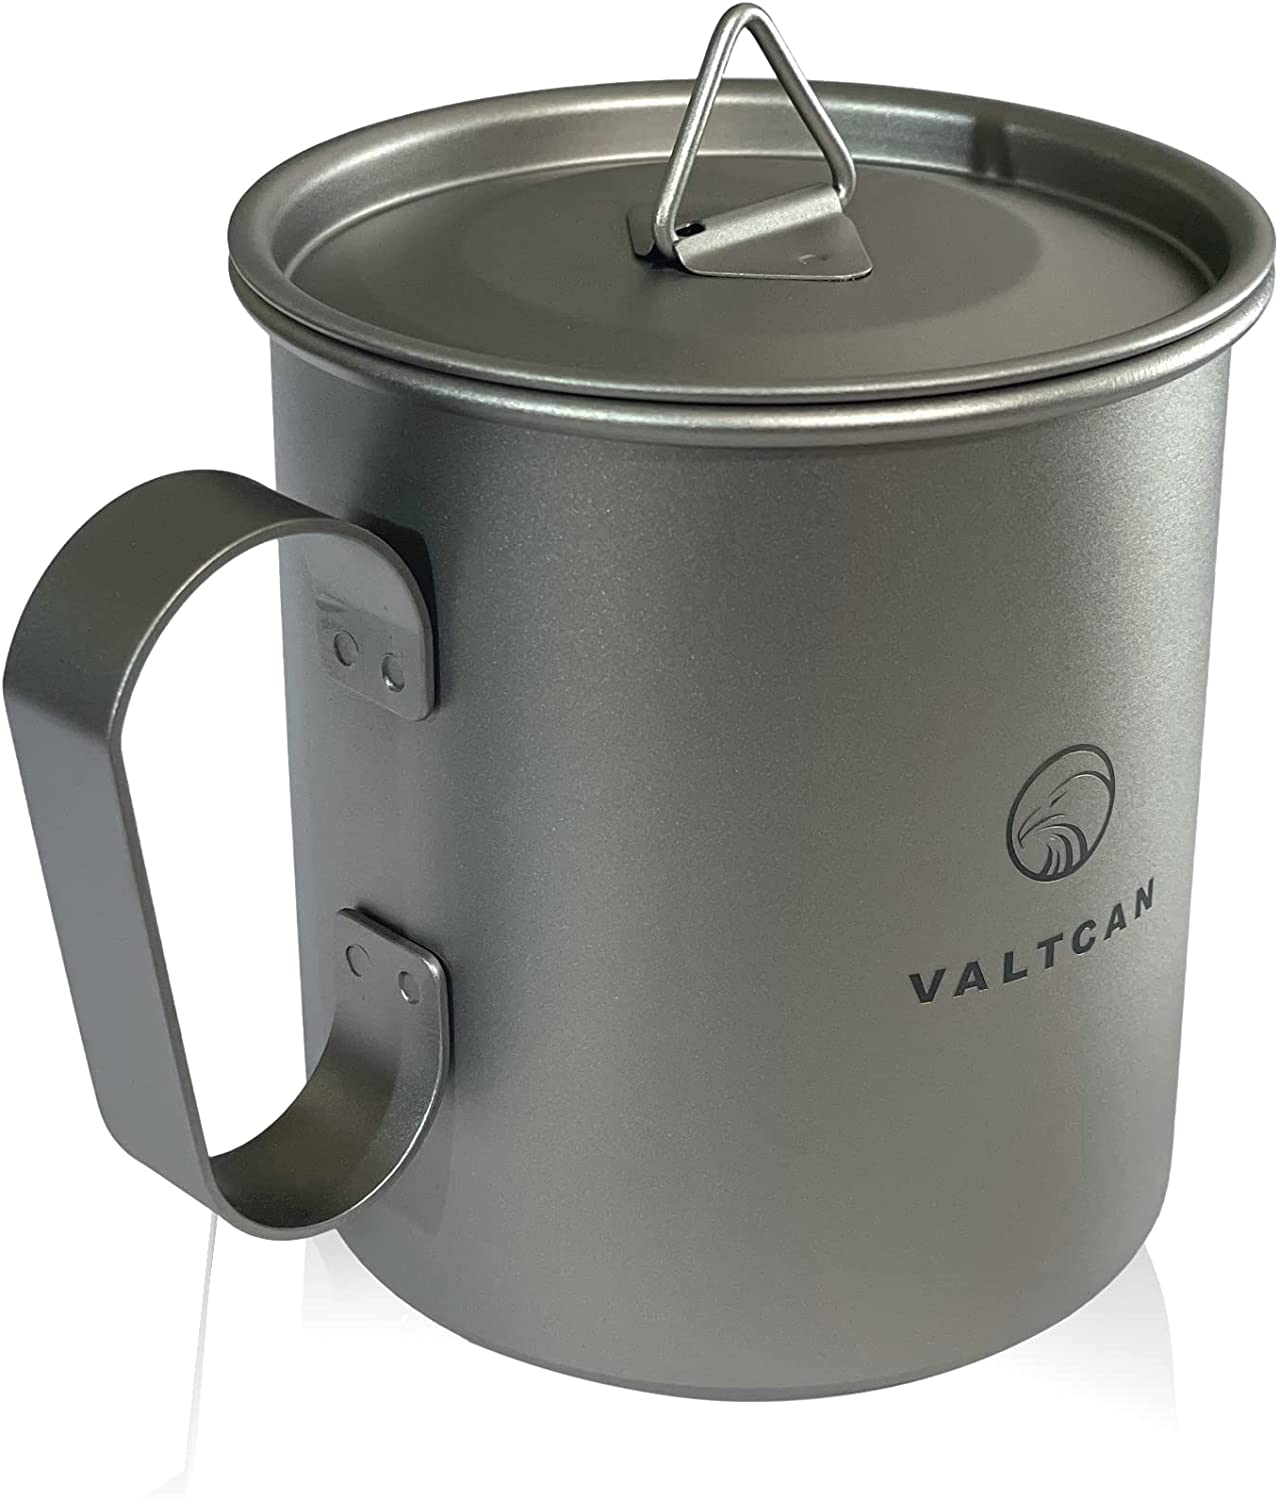 Valtcan 420ml Titanium Camping Cup with Tight Lid Fixed Rigid Handle 14.2 fl oz 81g